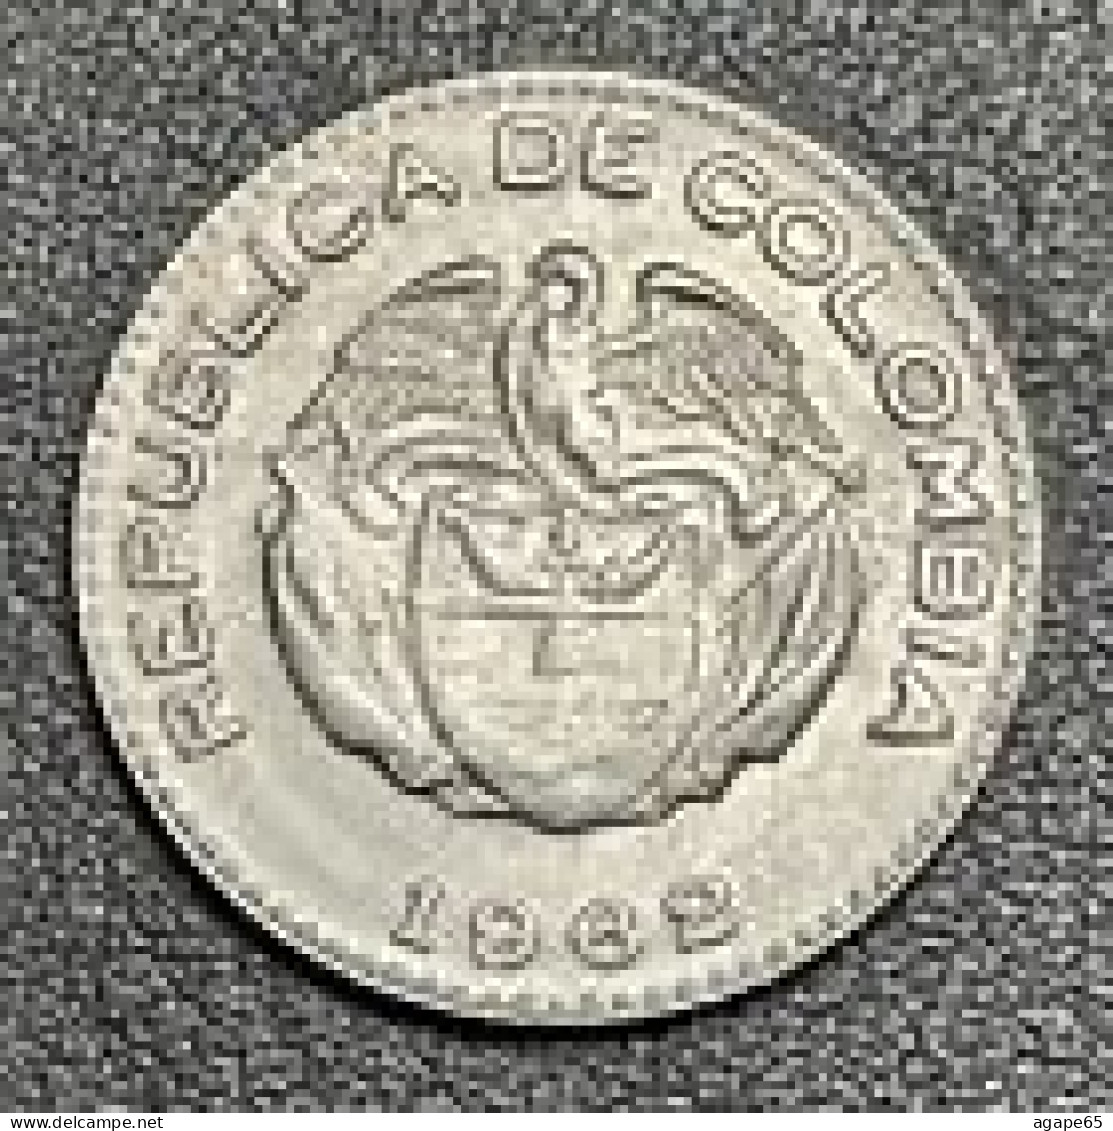 10 Centavos, Colombia, 1962 - Kolumbien